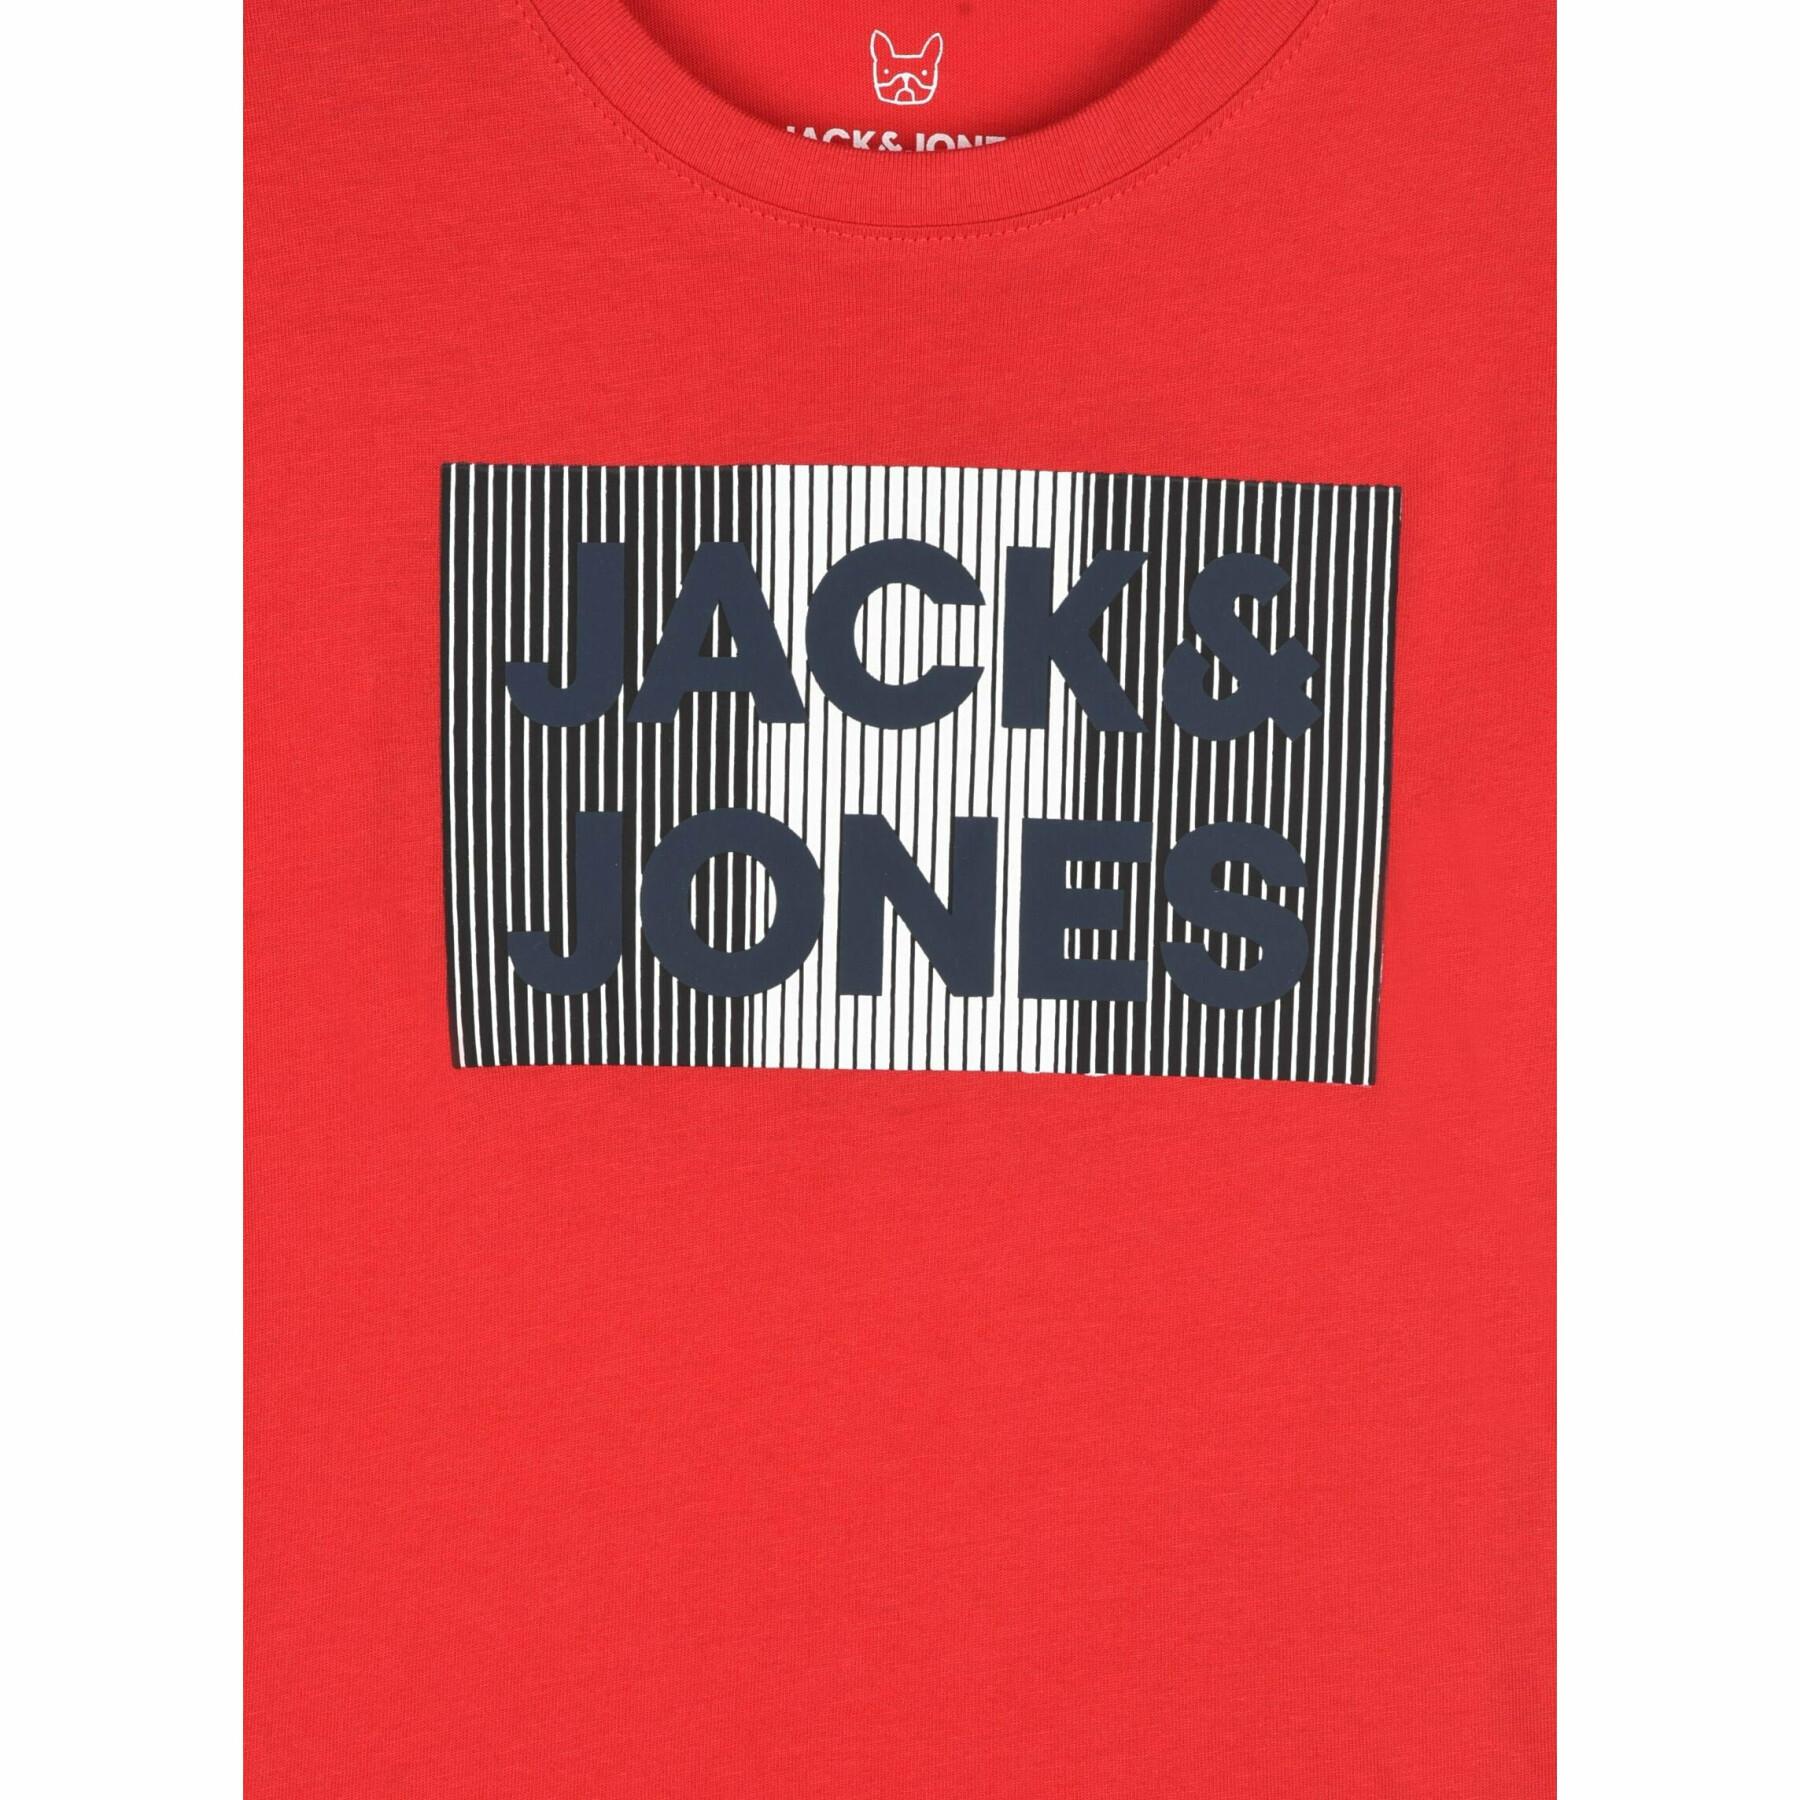 Camiseta niños Jack & Jones Ecorp